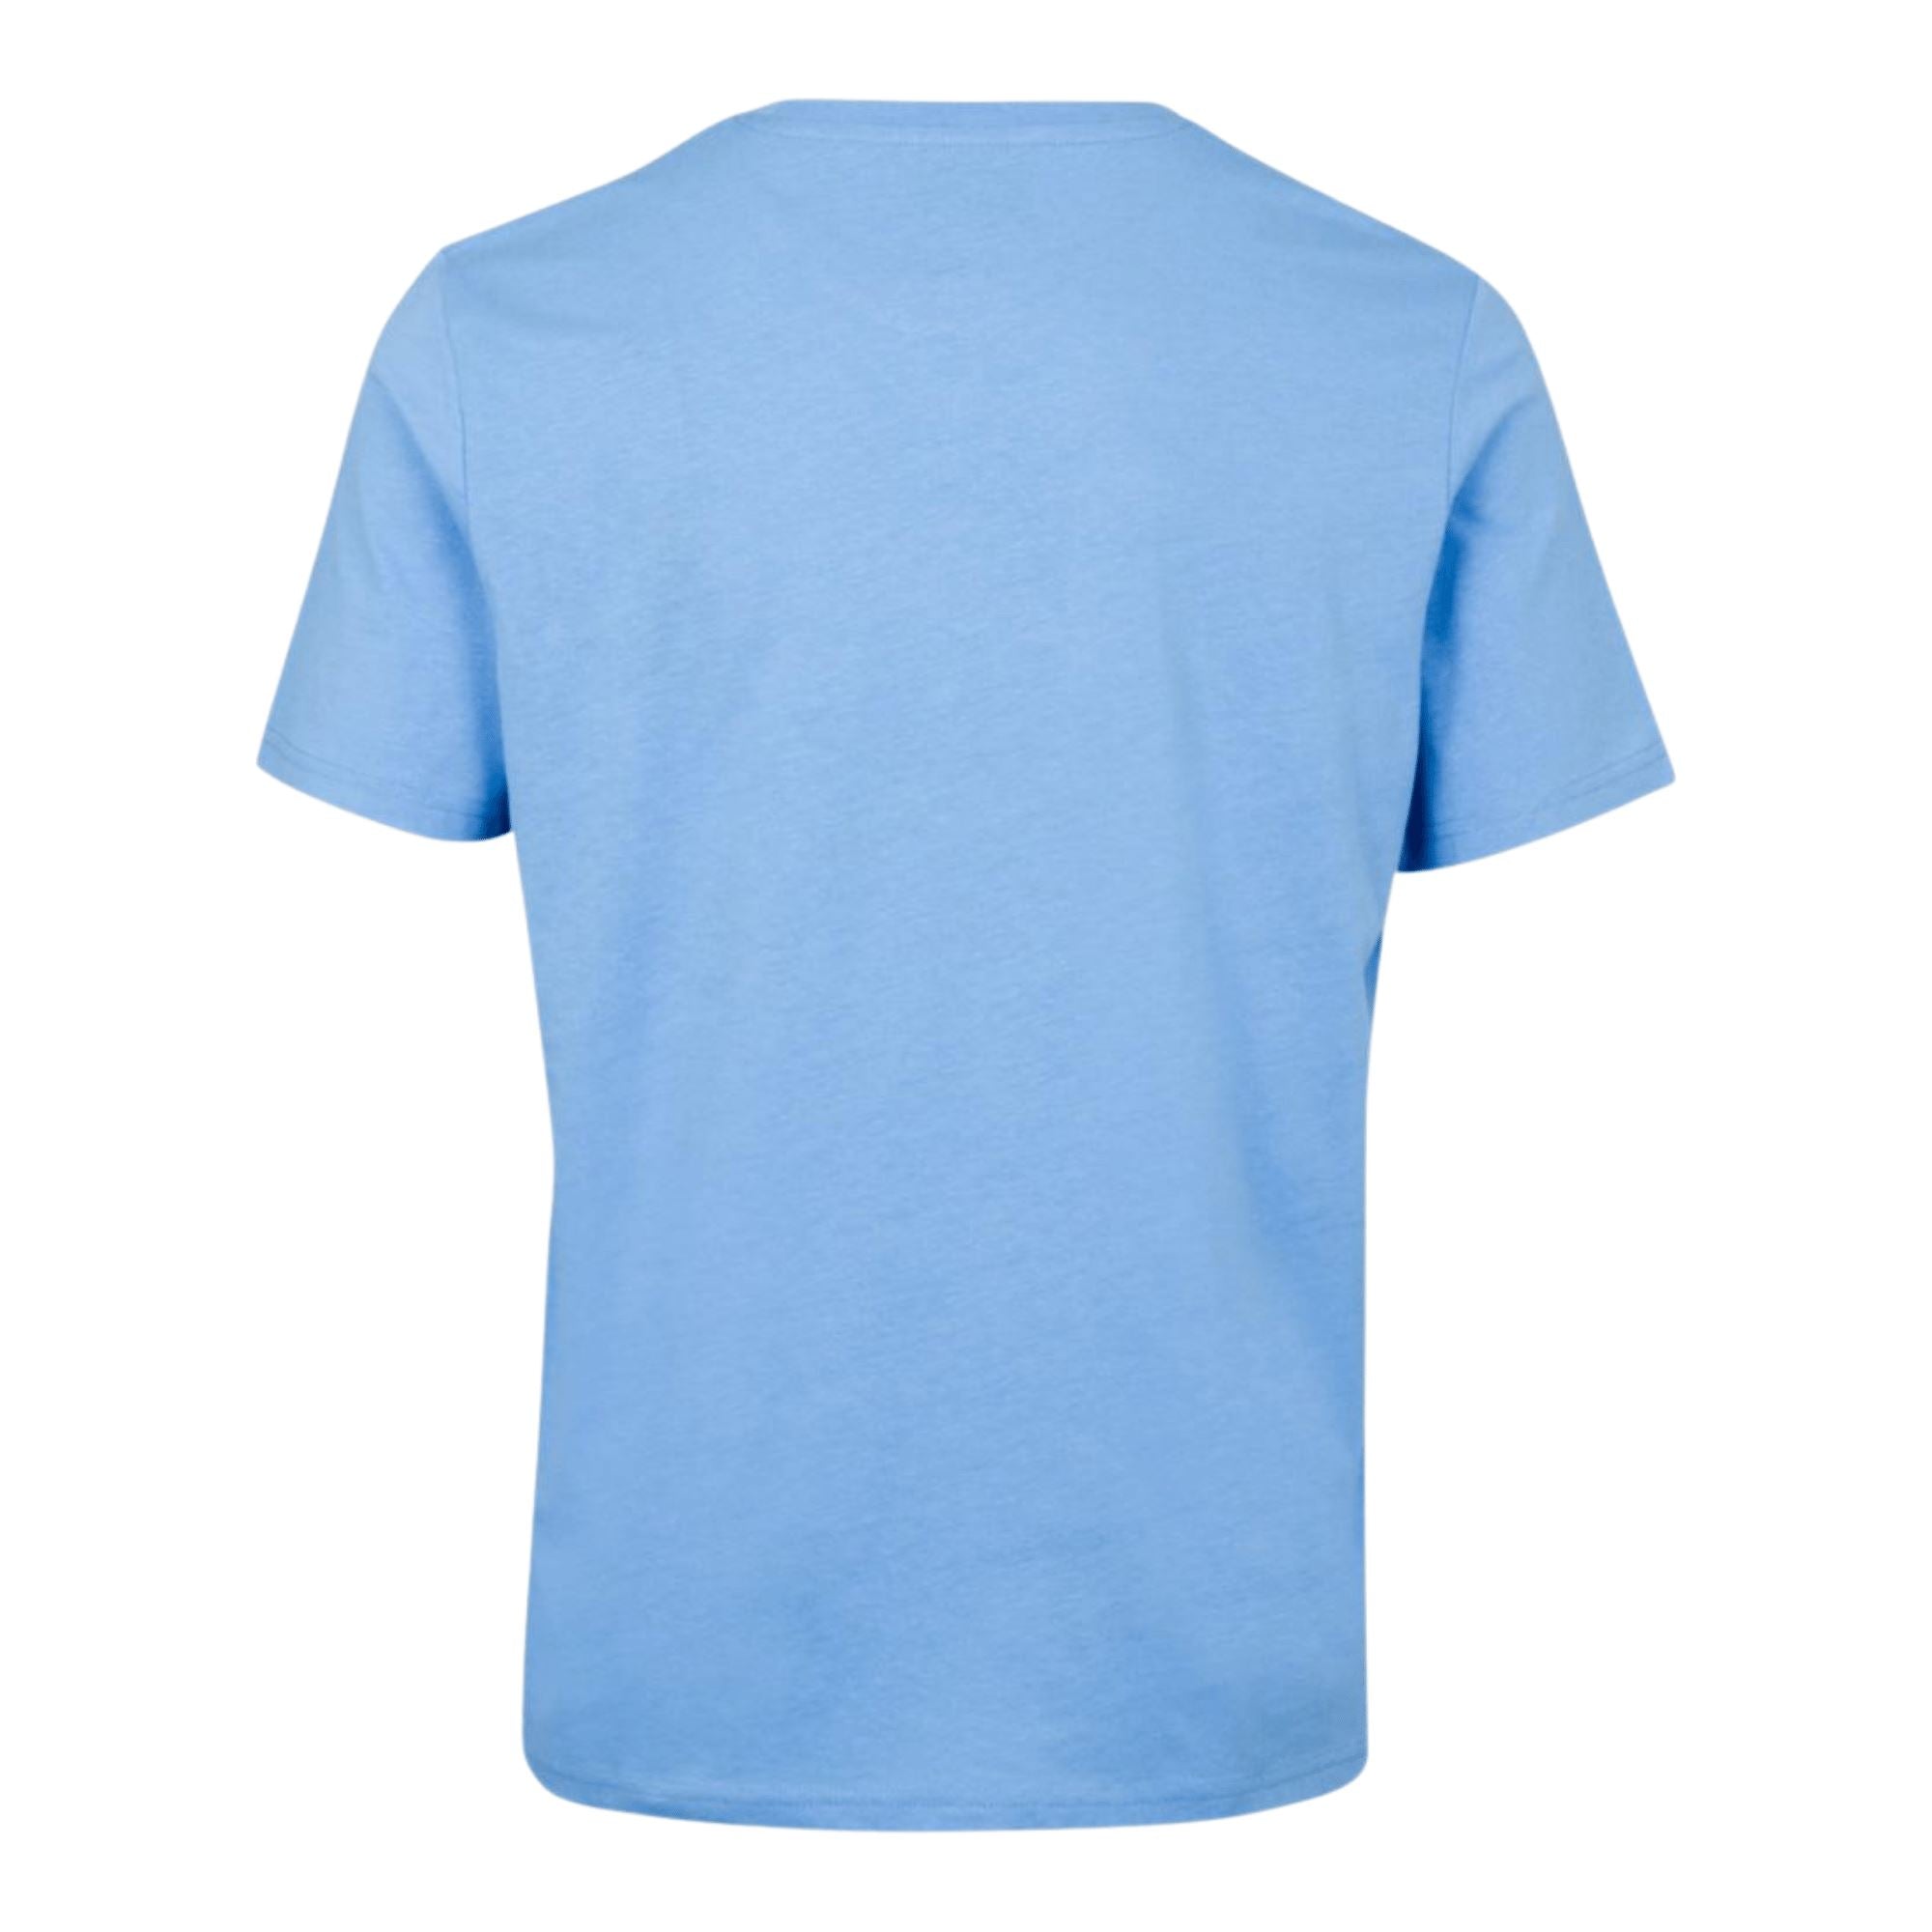 Kappa Meleto T-Shirt Light Blue - ITASPORT